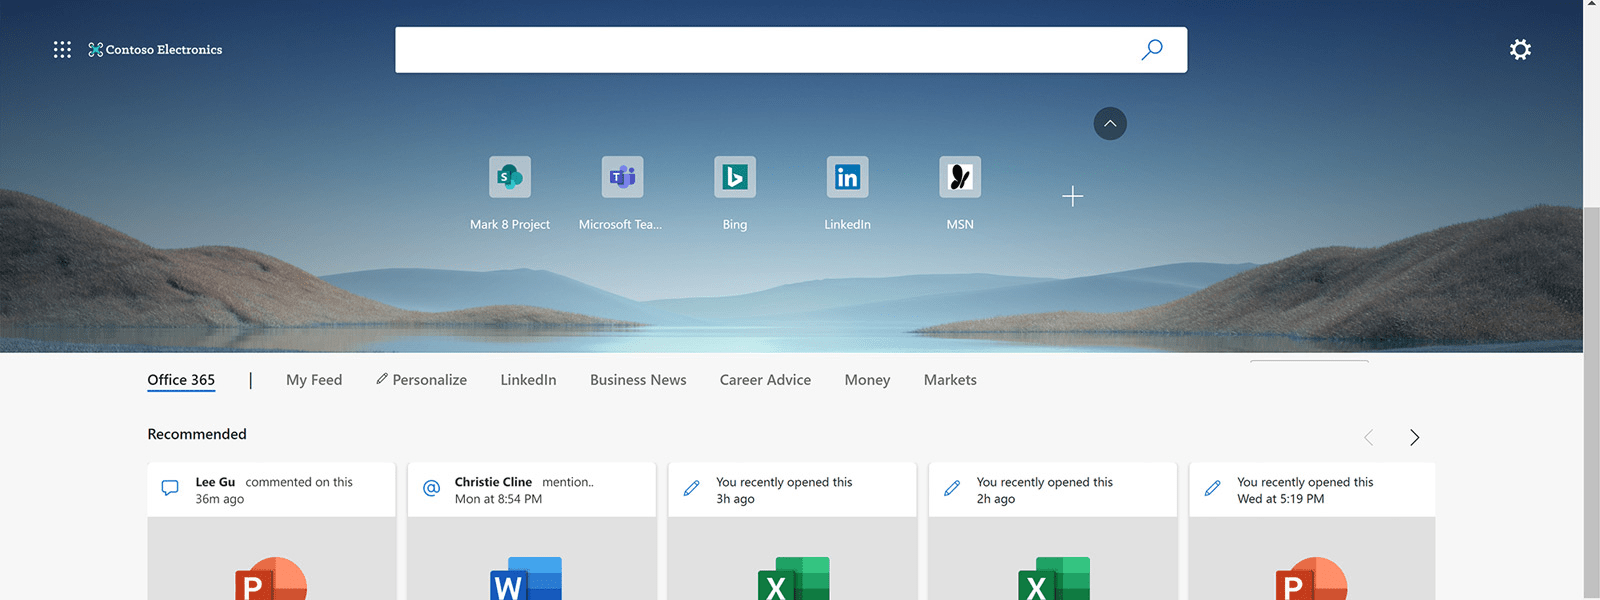 Das neue Dashboard in Microsoft Edge 88.0